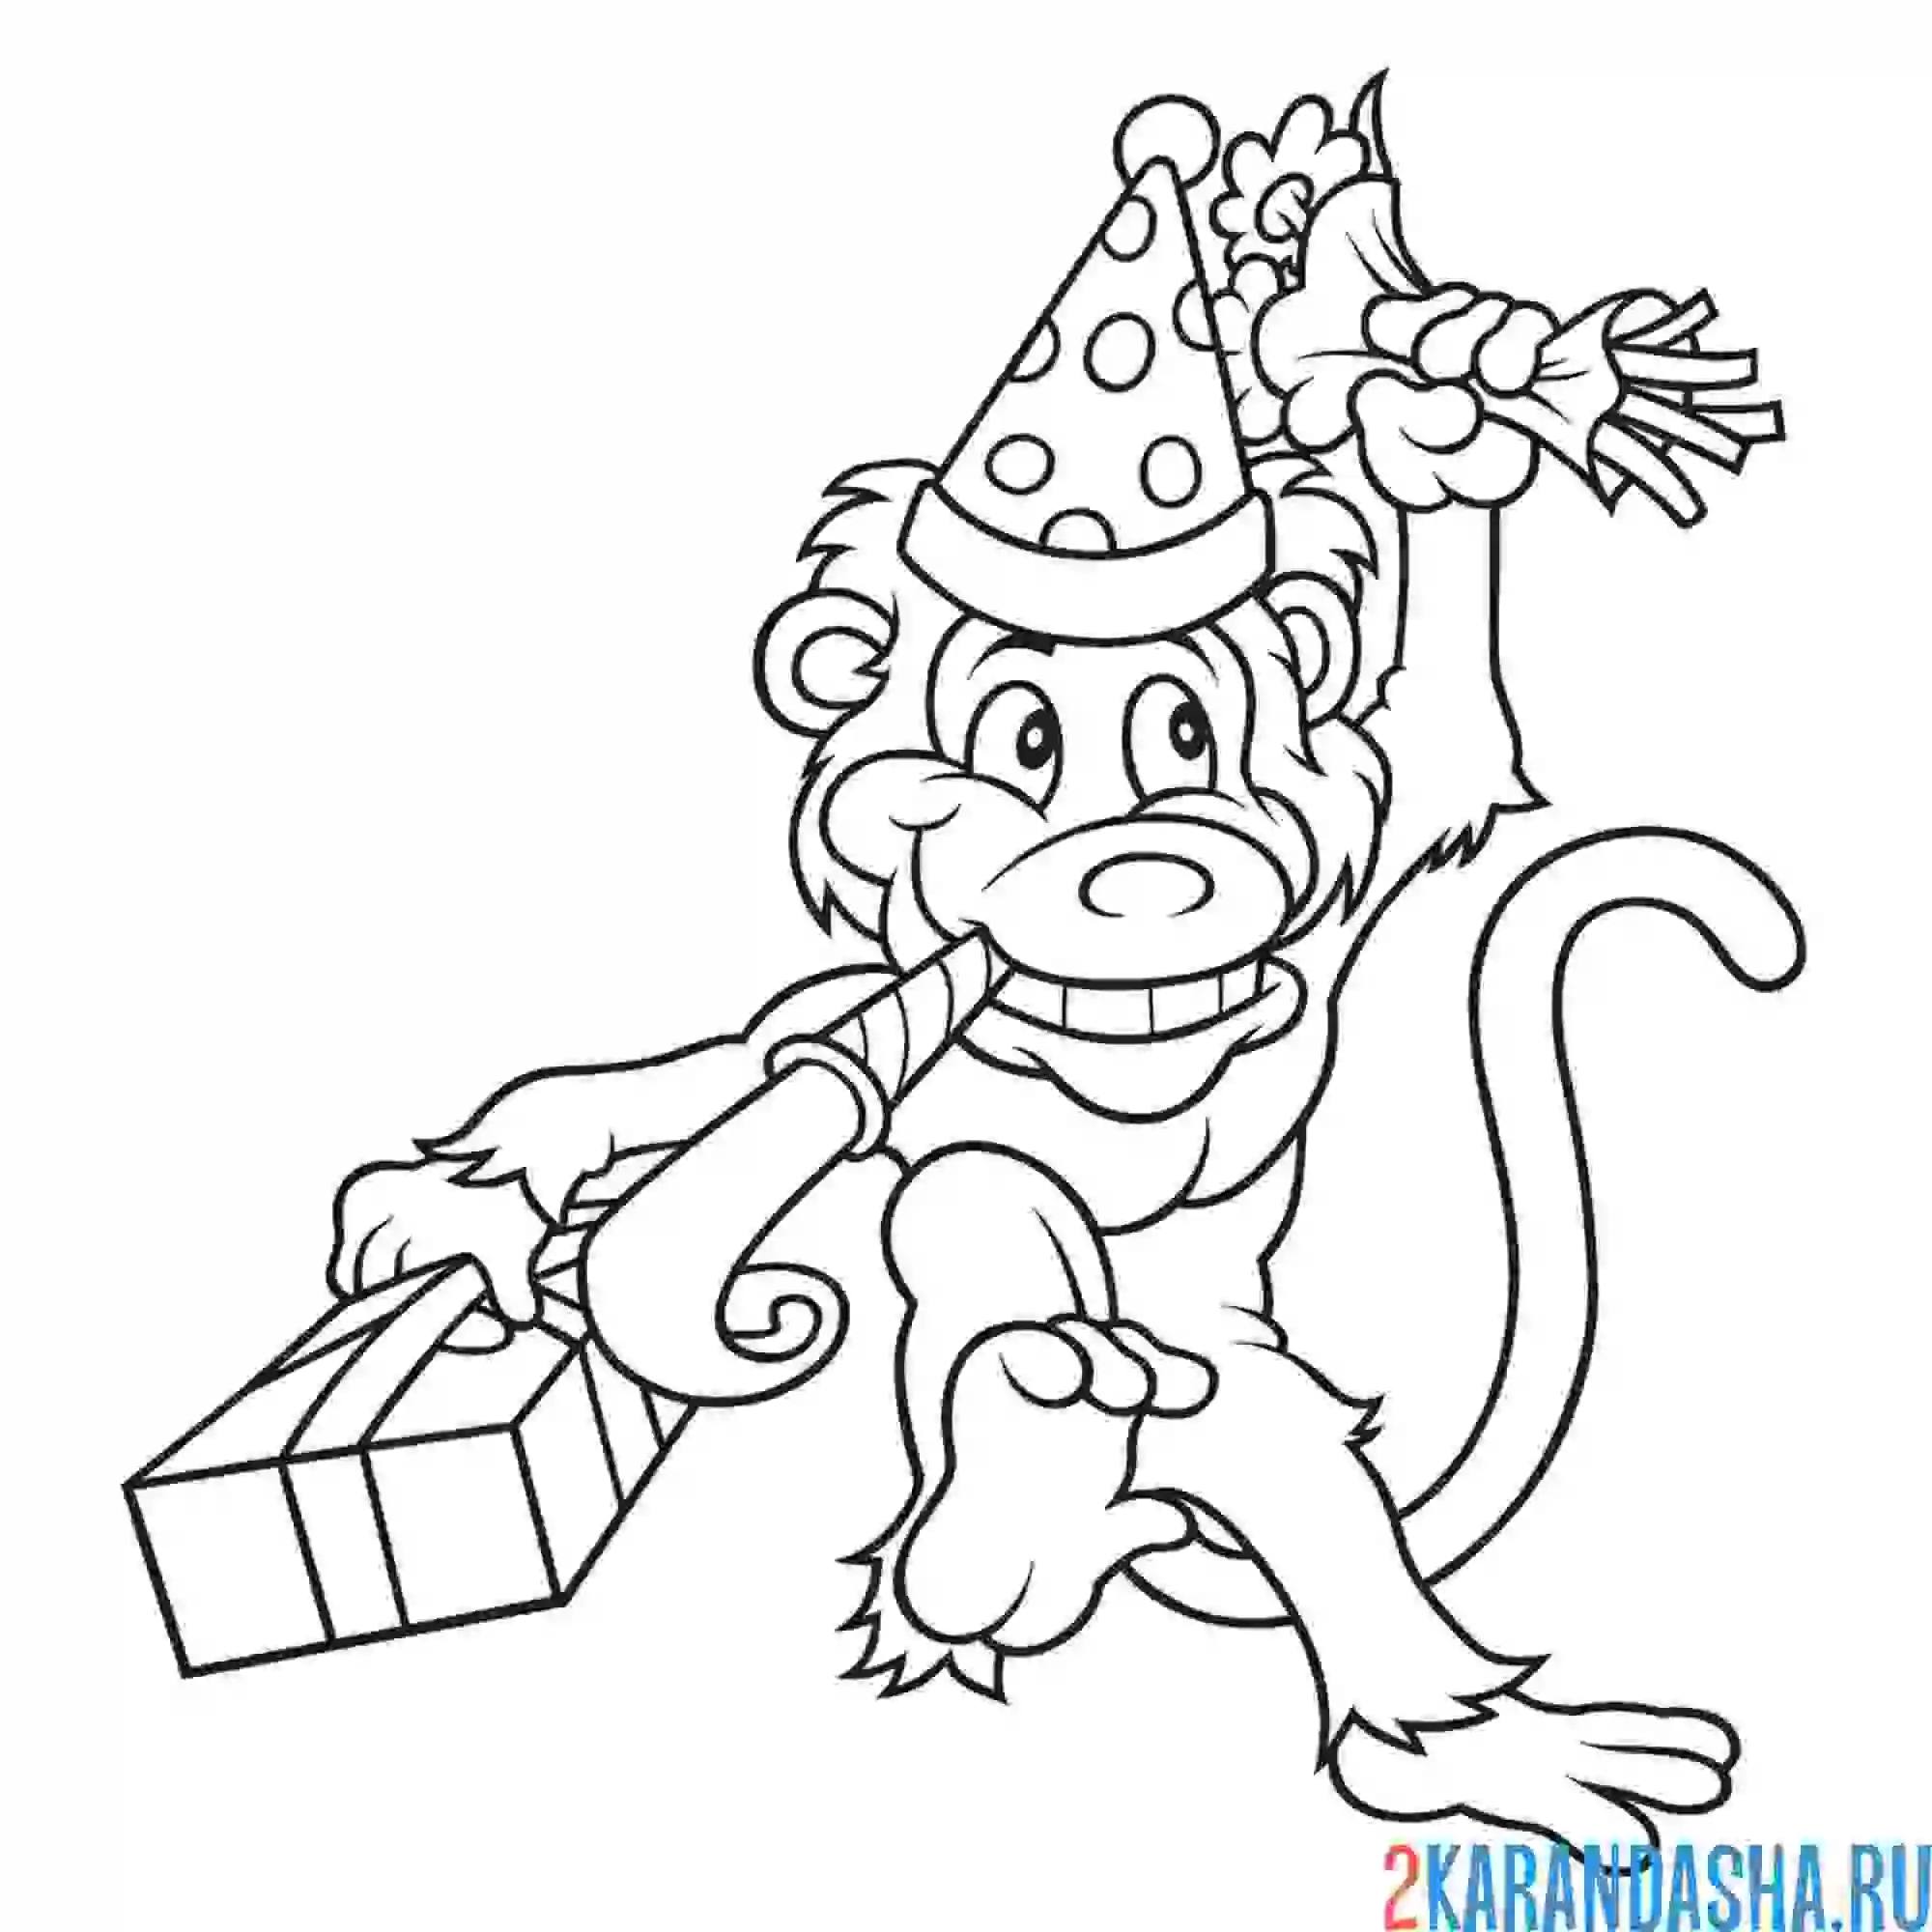 Раскраска обезьяна с подарками